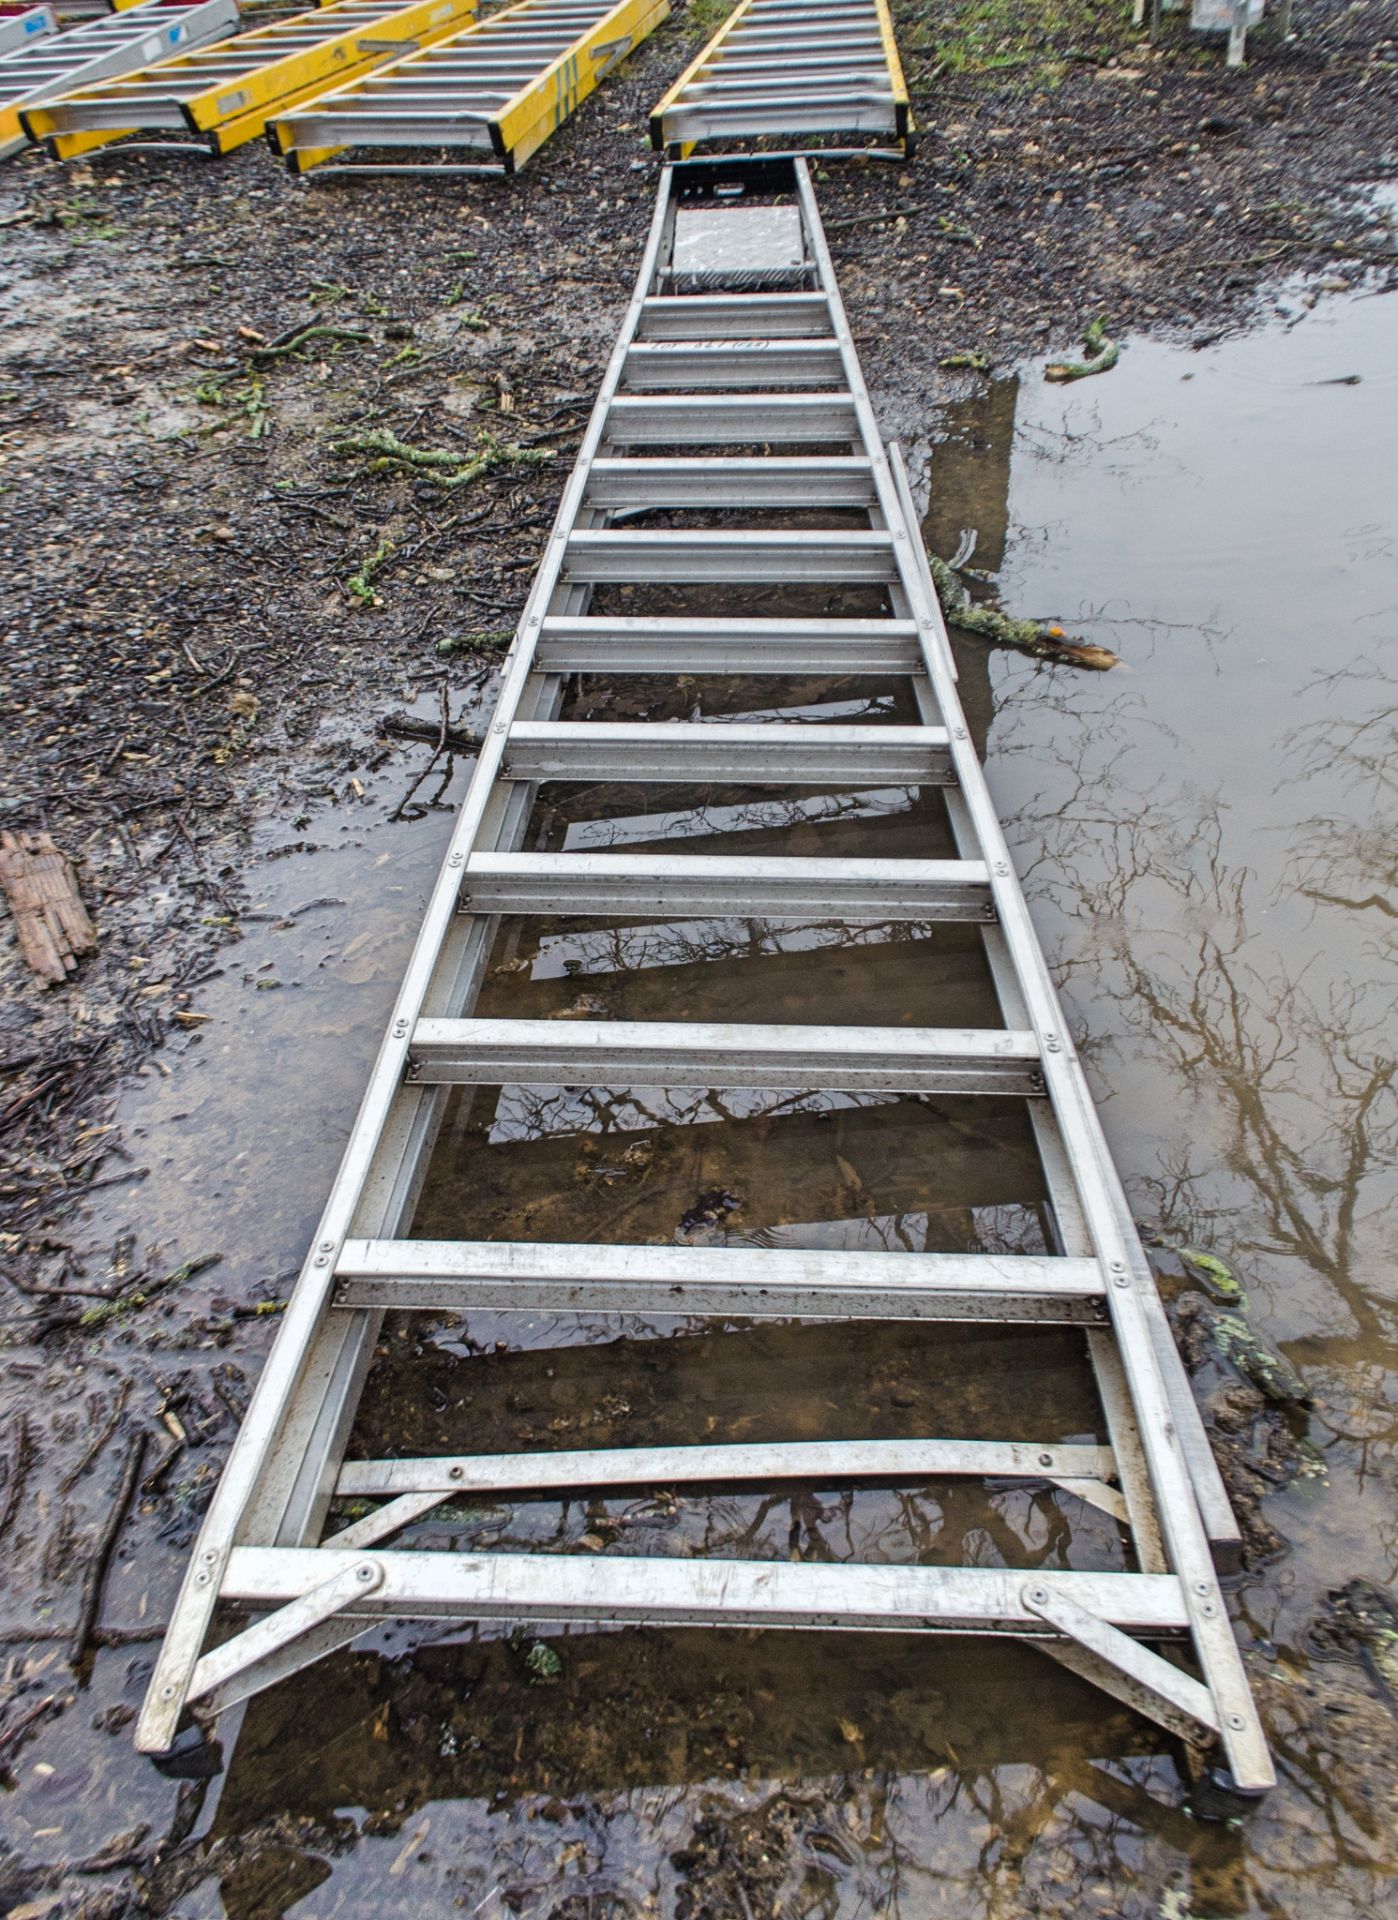 12 tread aluminium step ladder 33221296